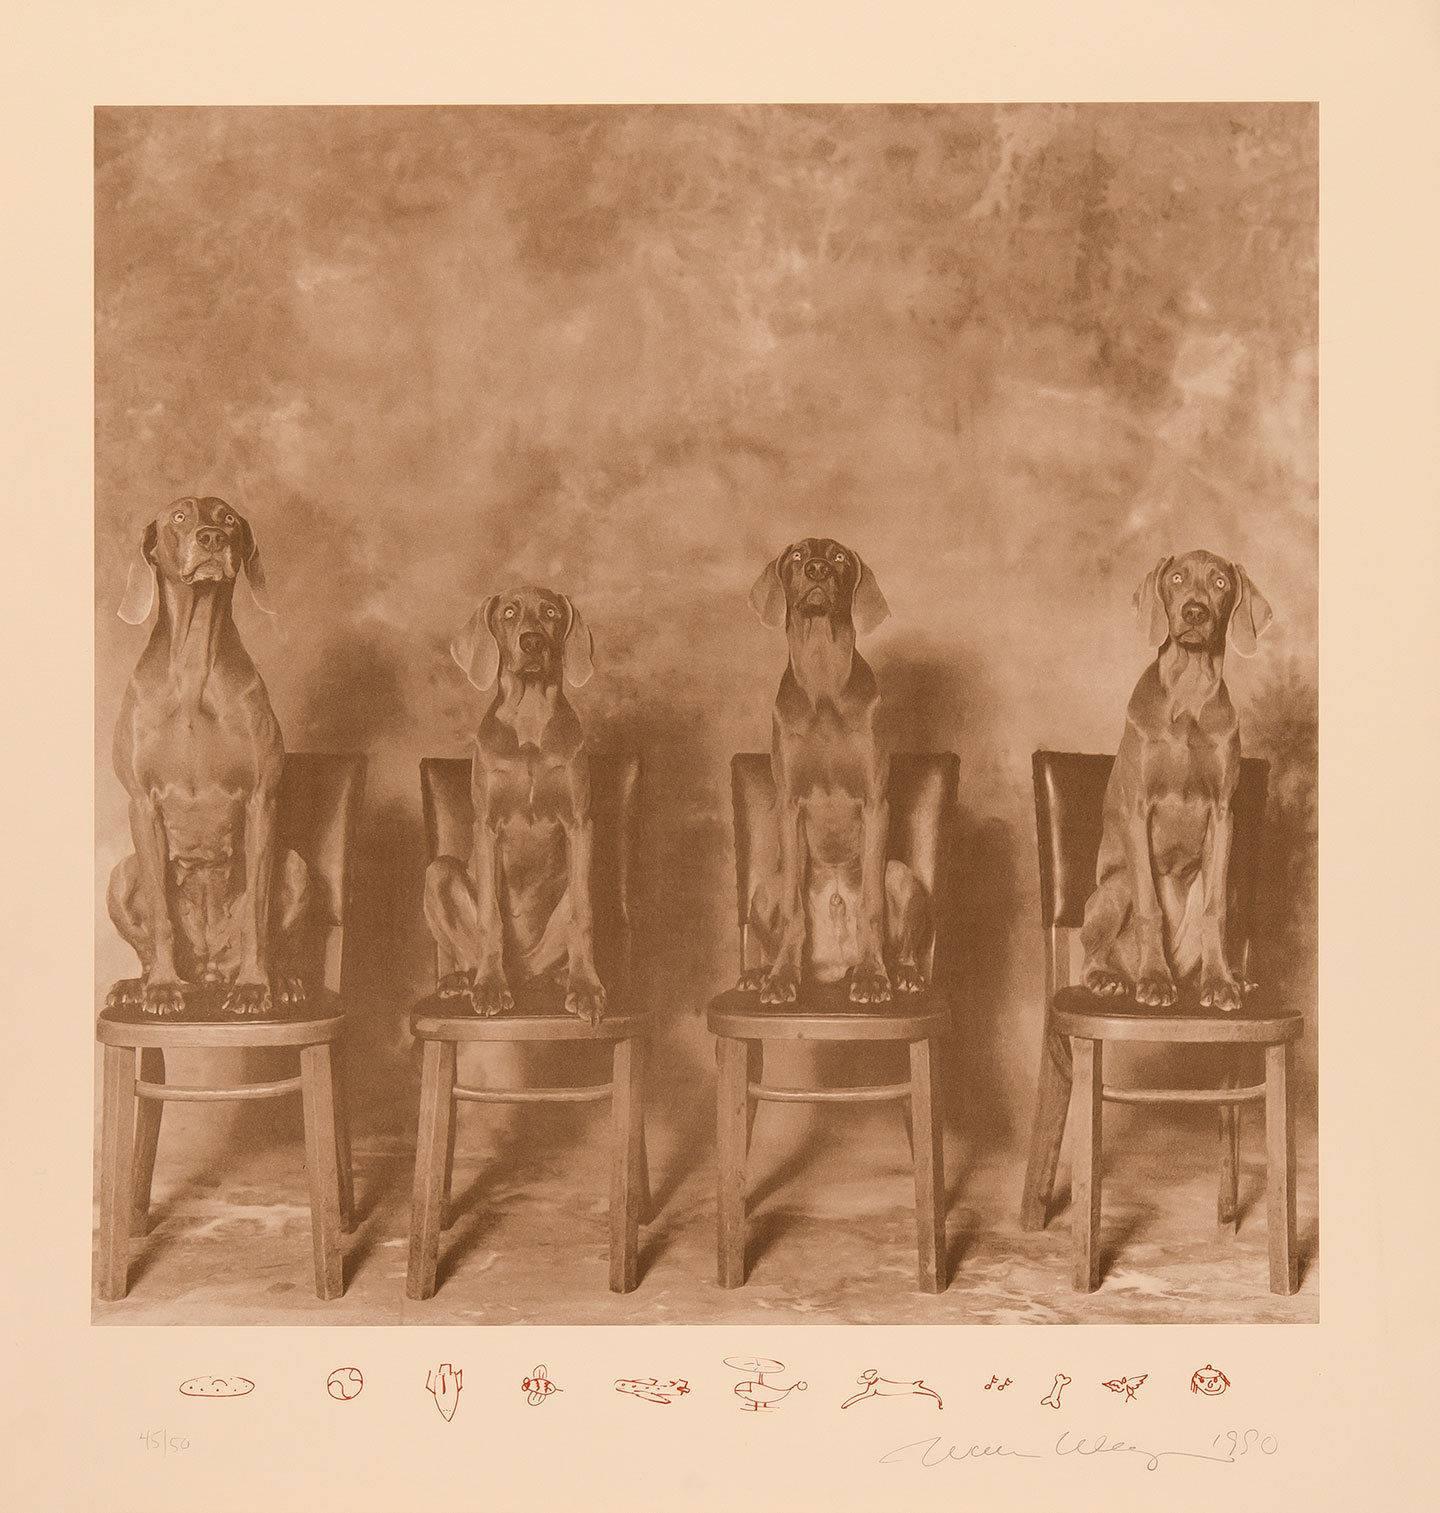 William Wegman Animal Print - Four Dogs on Chairs